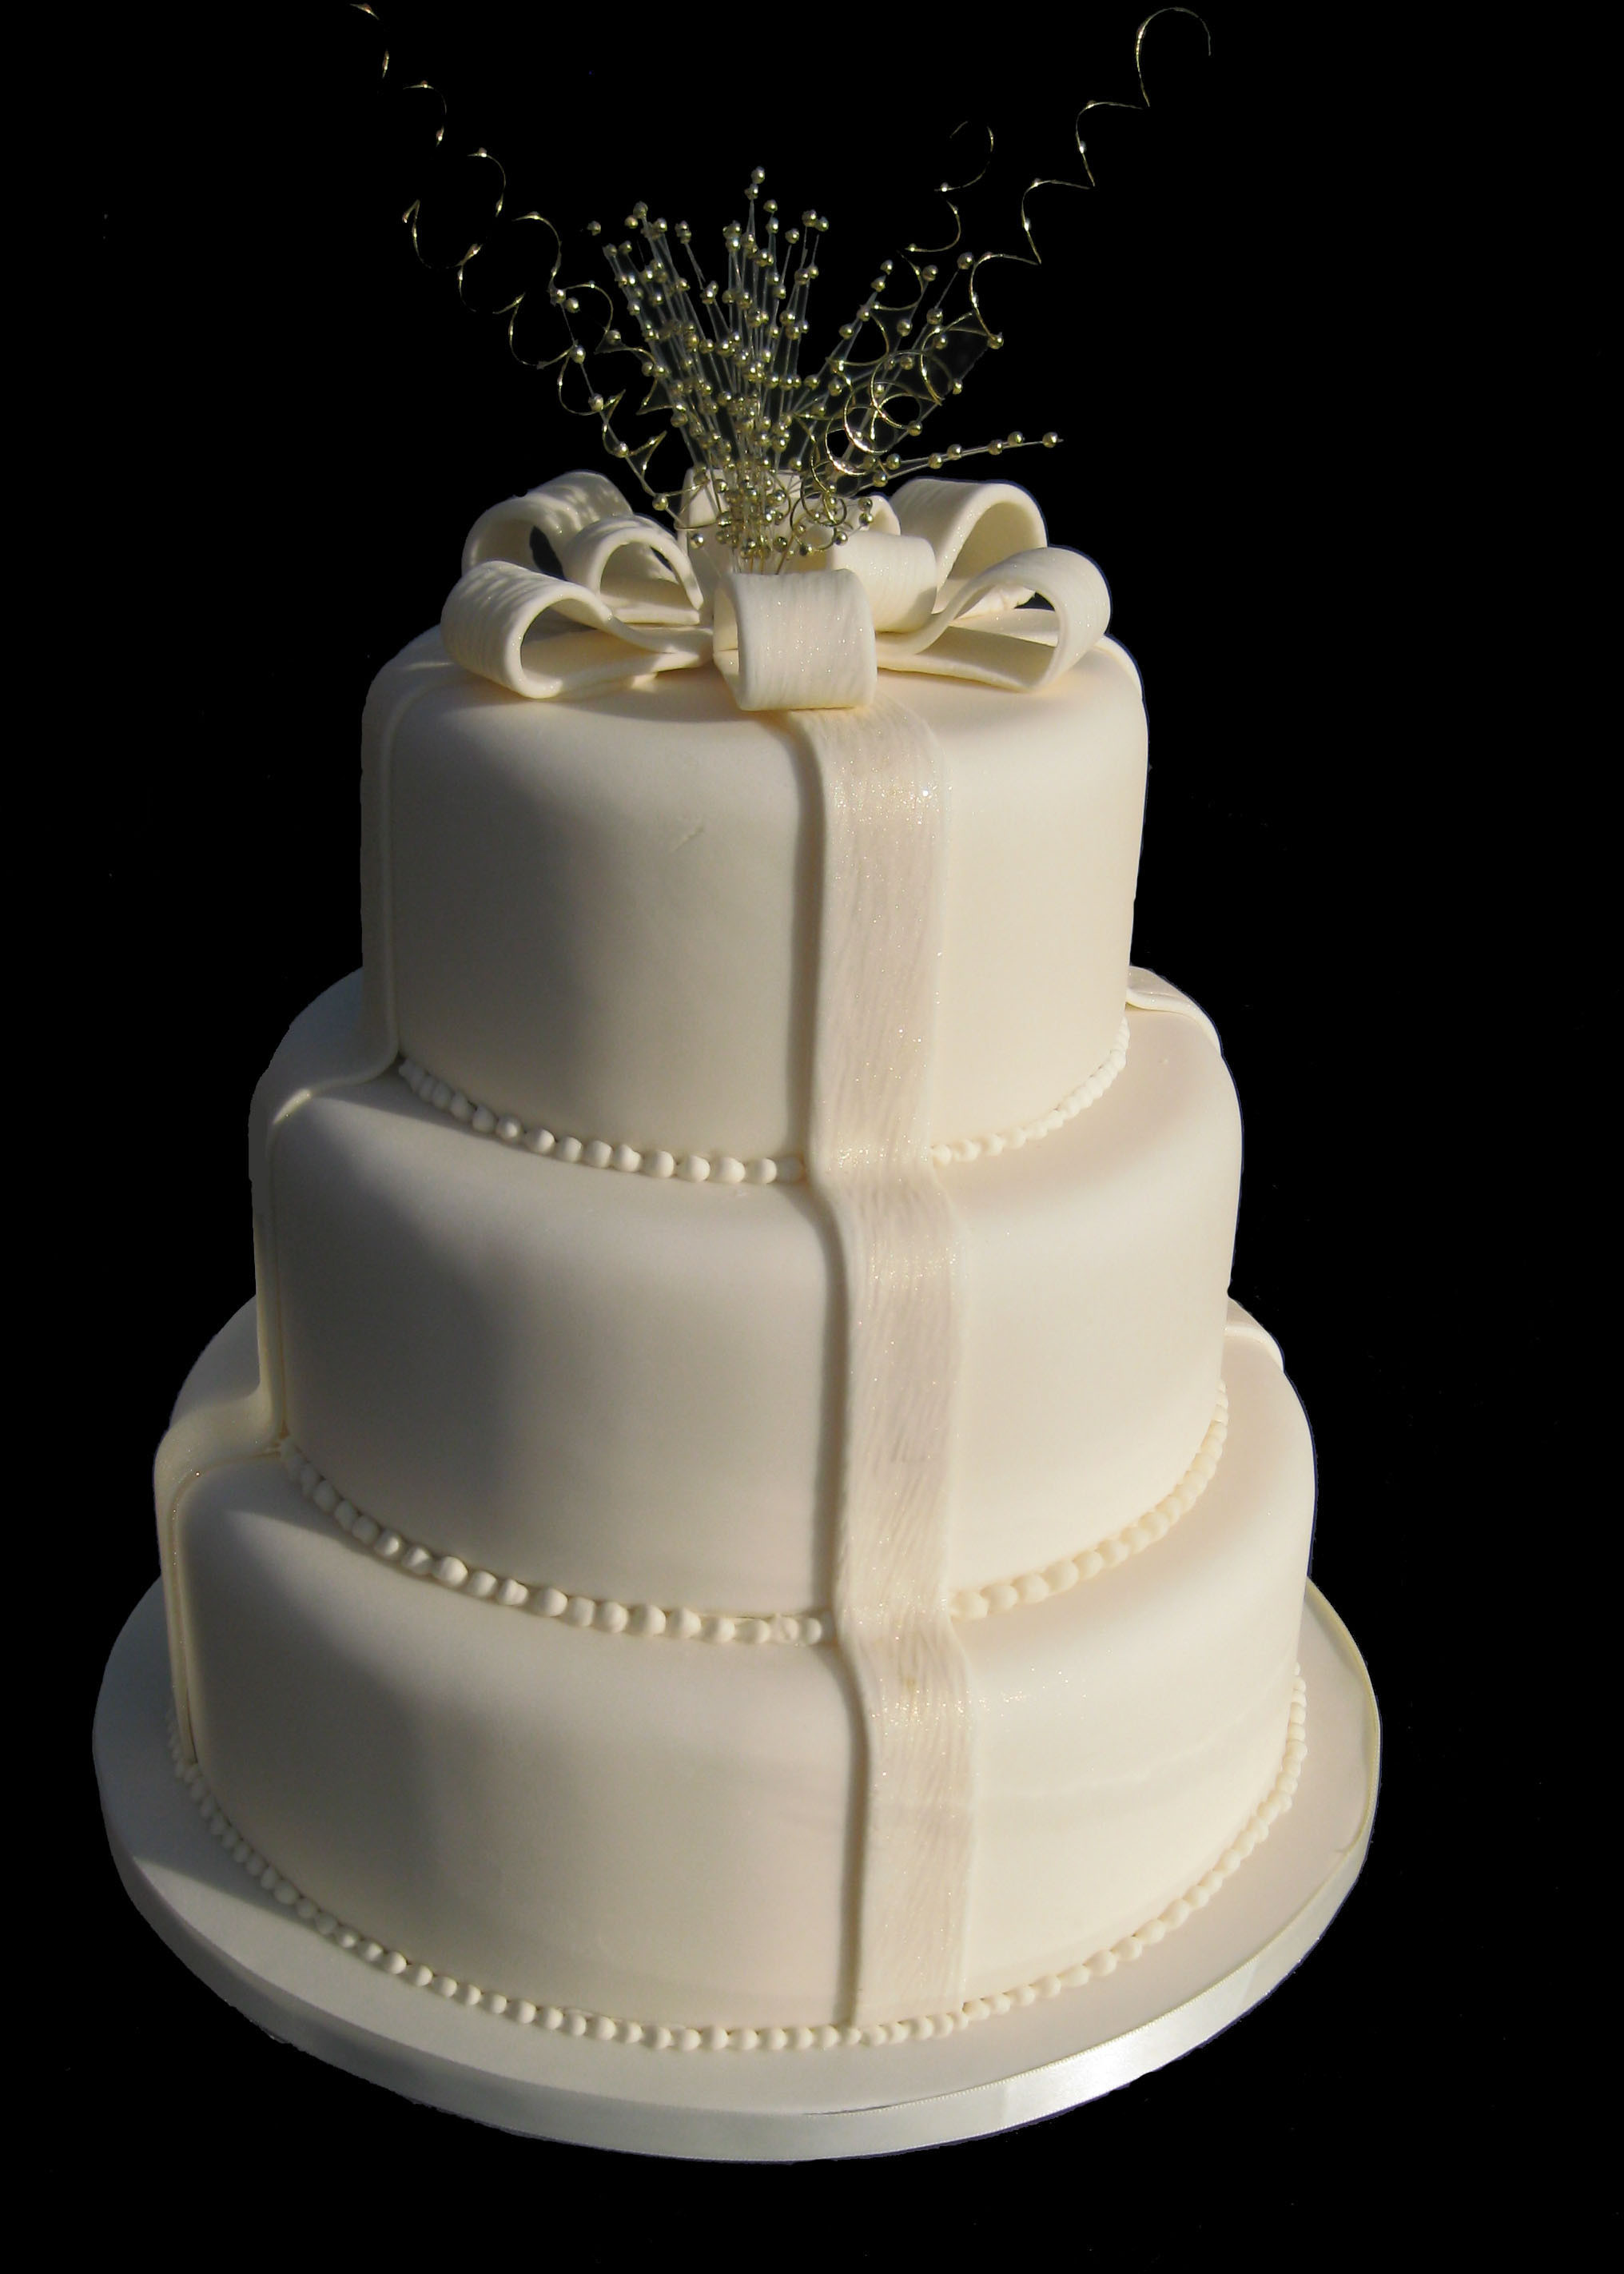 6 Layer Wedding Cakes
 3 tier wedding cake idea in 2017